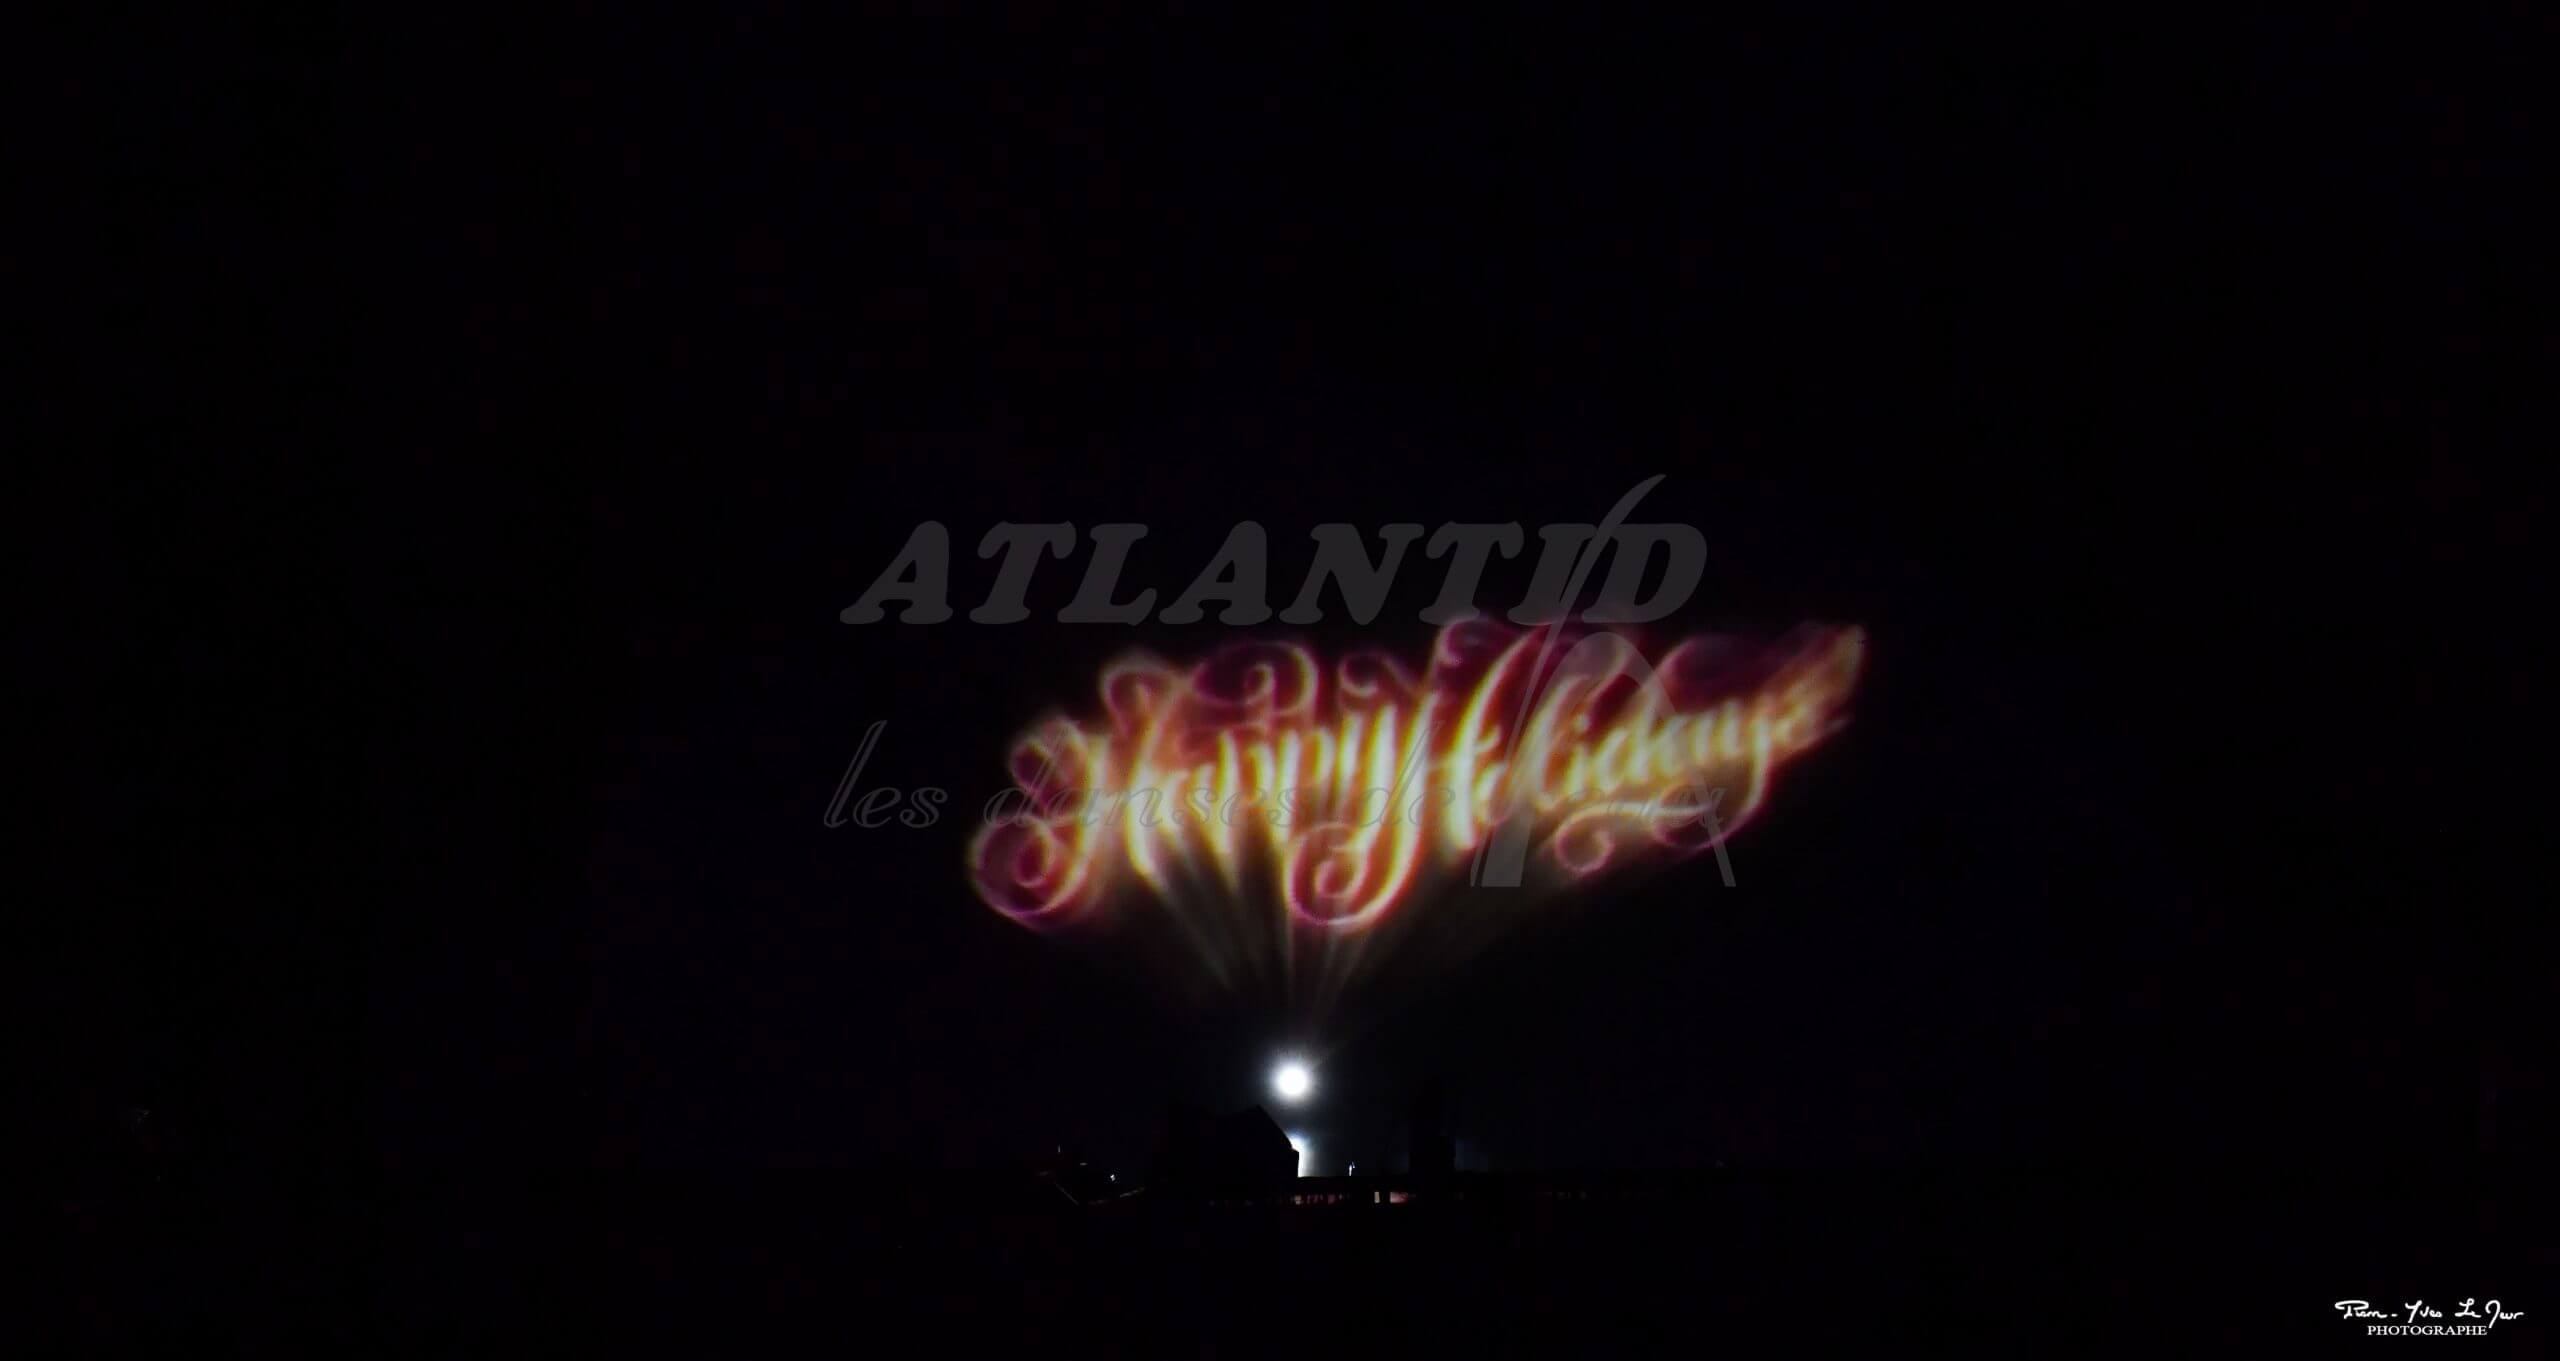 Atlantid - Projection de texte Happy Holidays sur eau